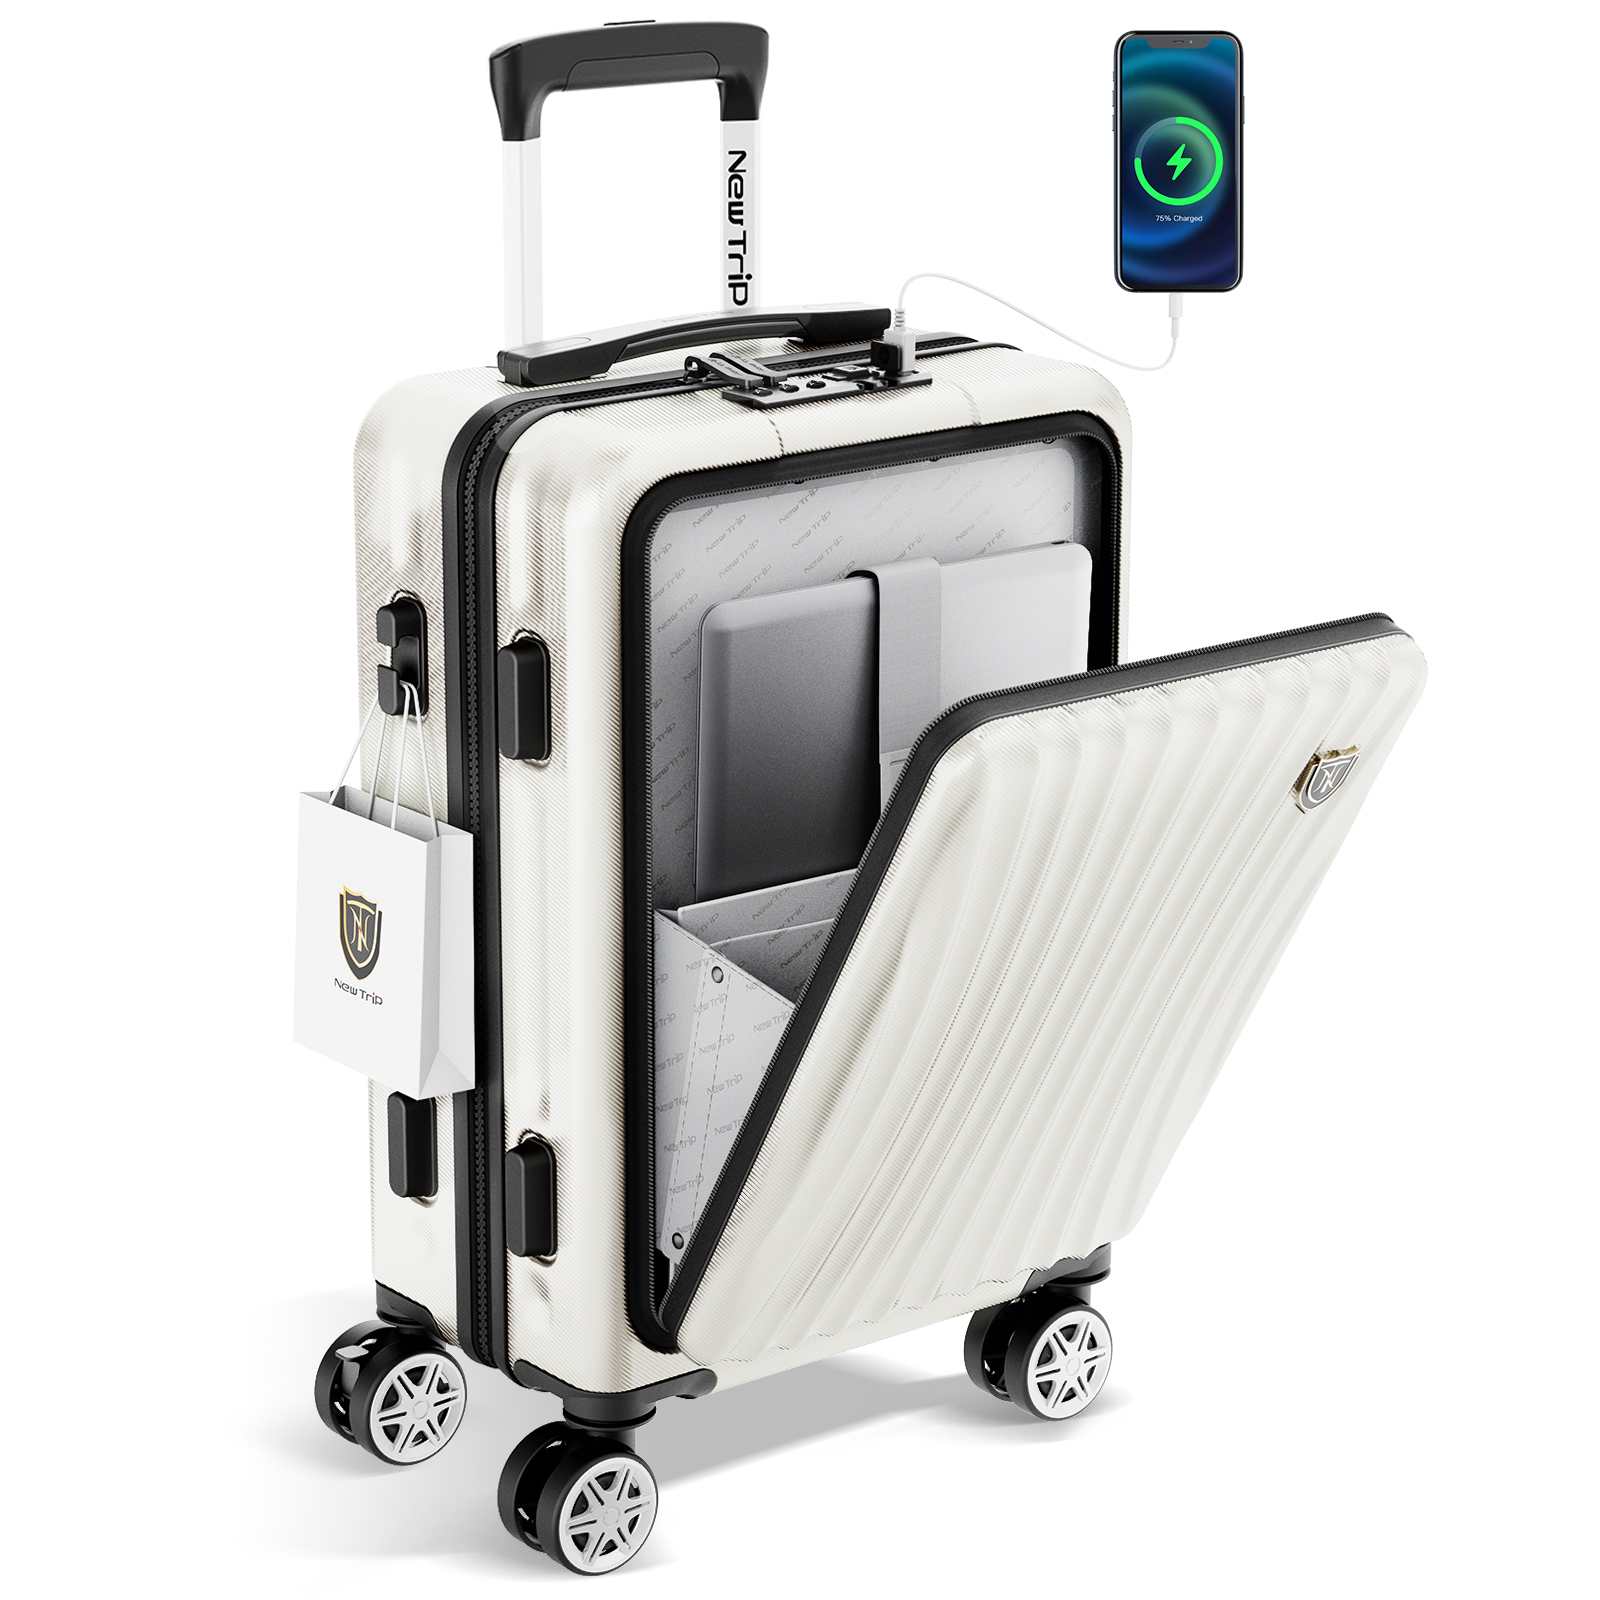 New Trip スーツケース フロントオープン キャリーケース 機内持ち込み 